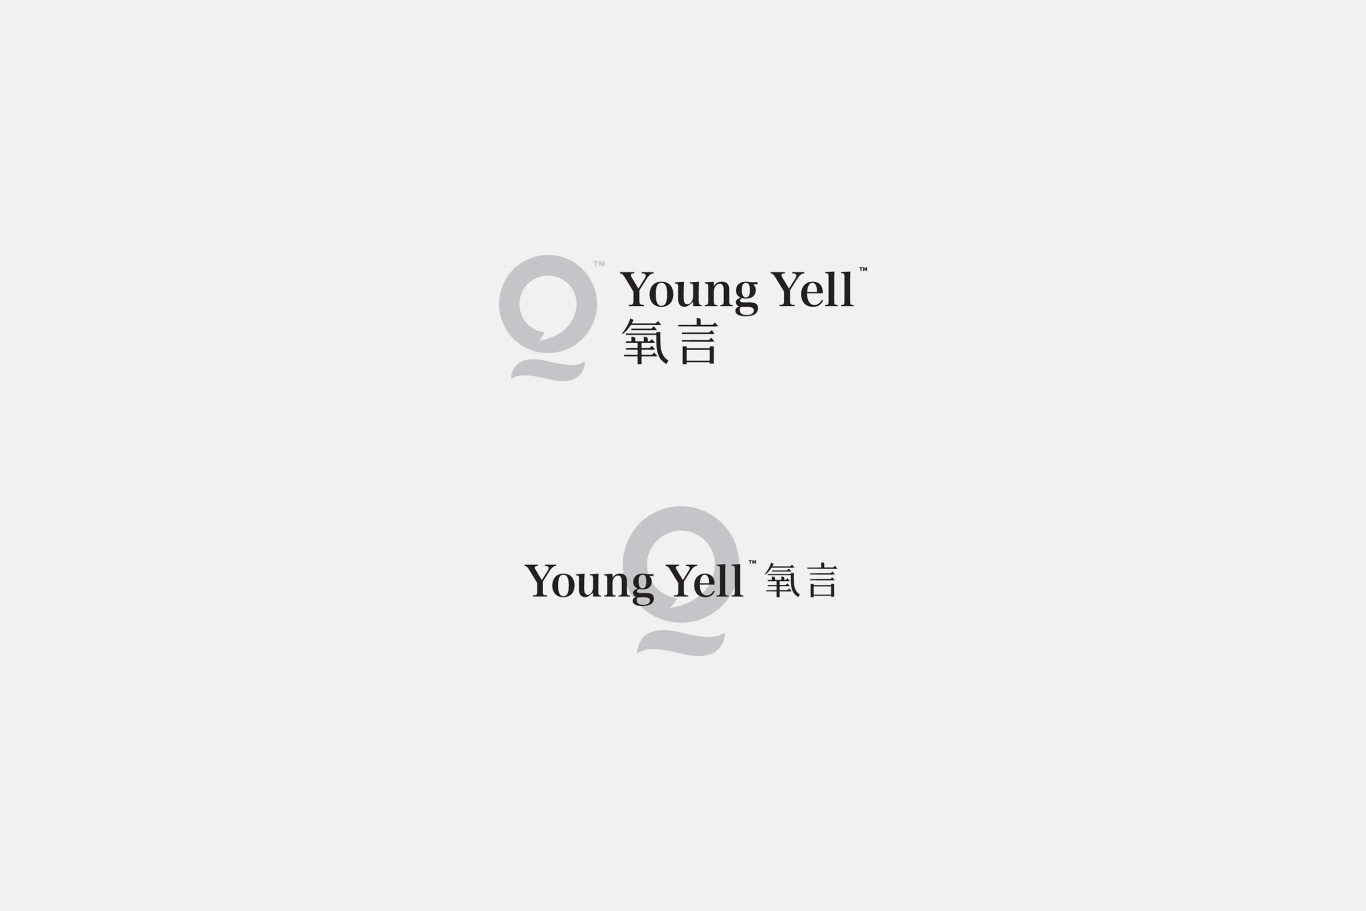 氧言品牌VI设计 Young Yell Brand VI Design | 高端内衣服装行业LOGO设计图5